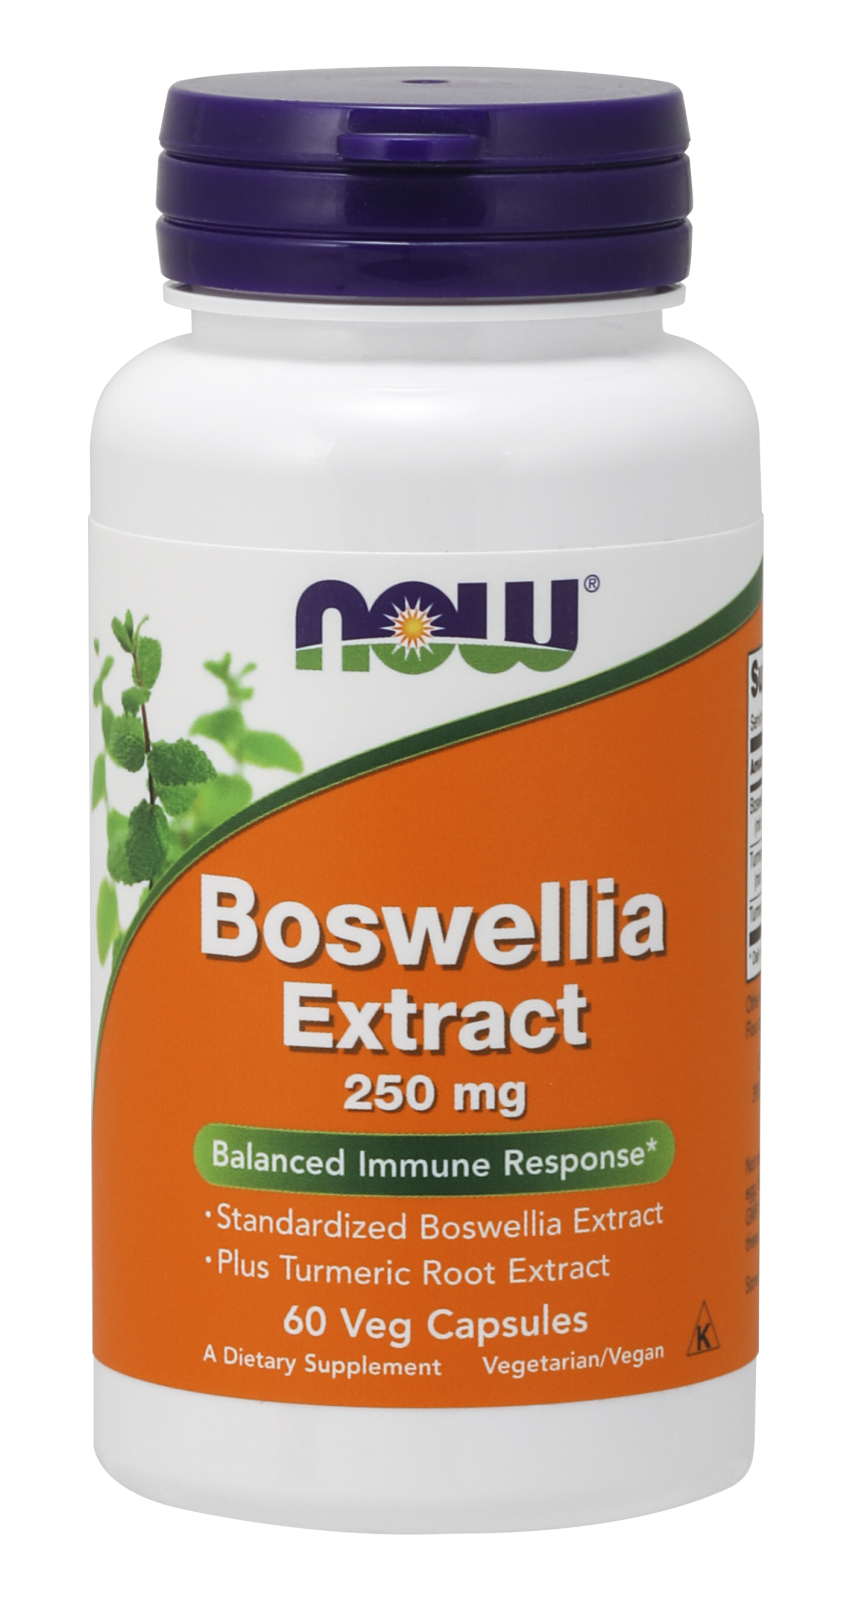 Boswellia Extract 250 mg - 60 Veg Capsules